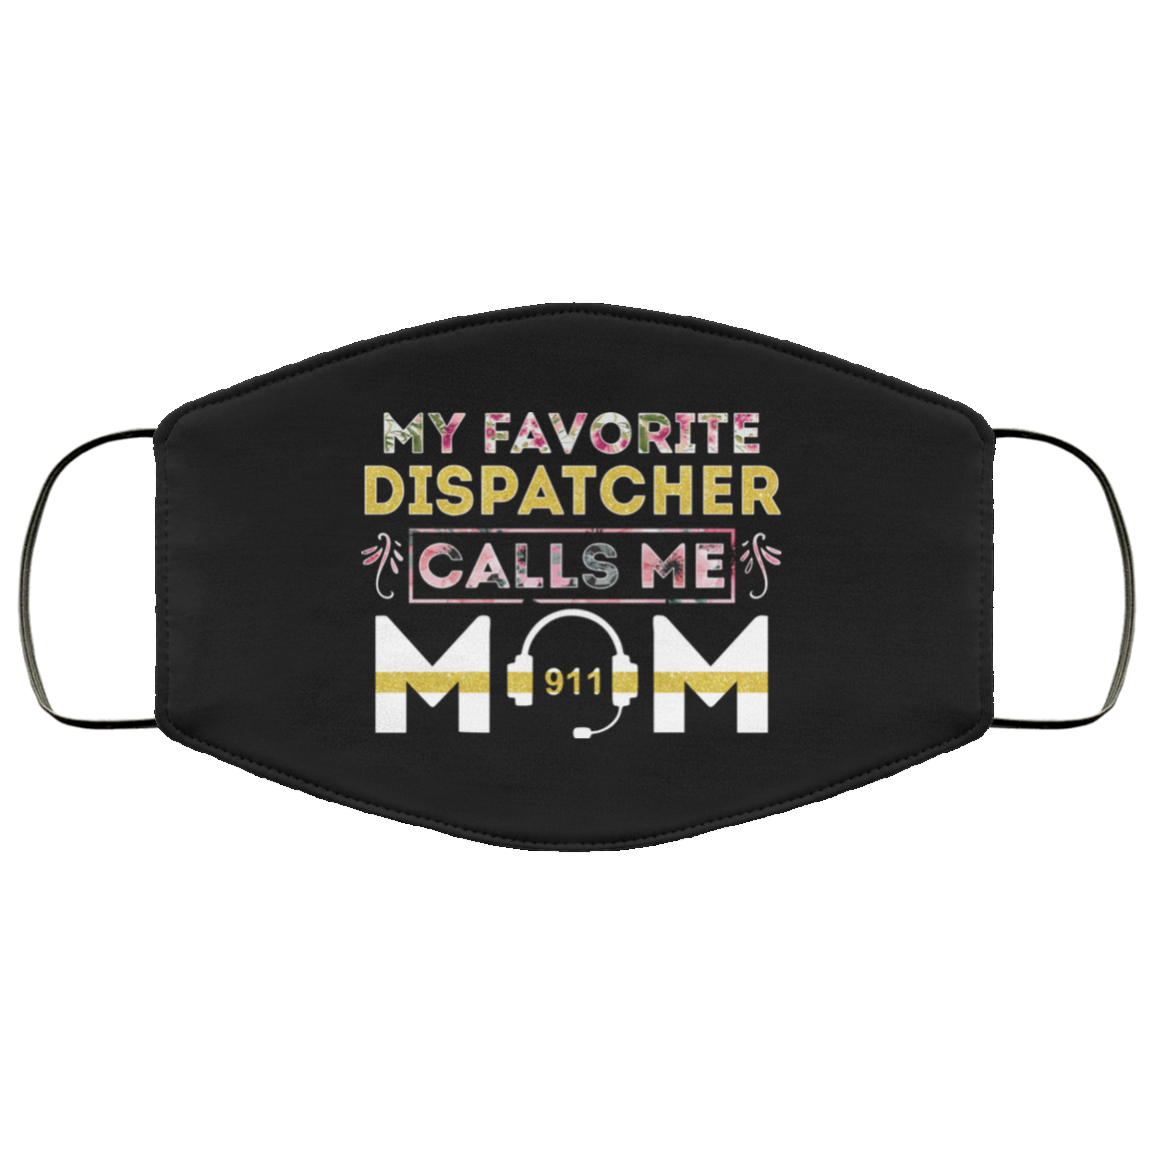 My Favorite Dispatcher Calls Me Mom Face Mask 2